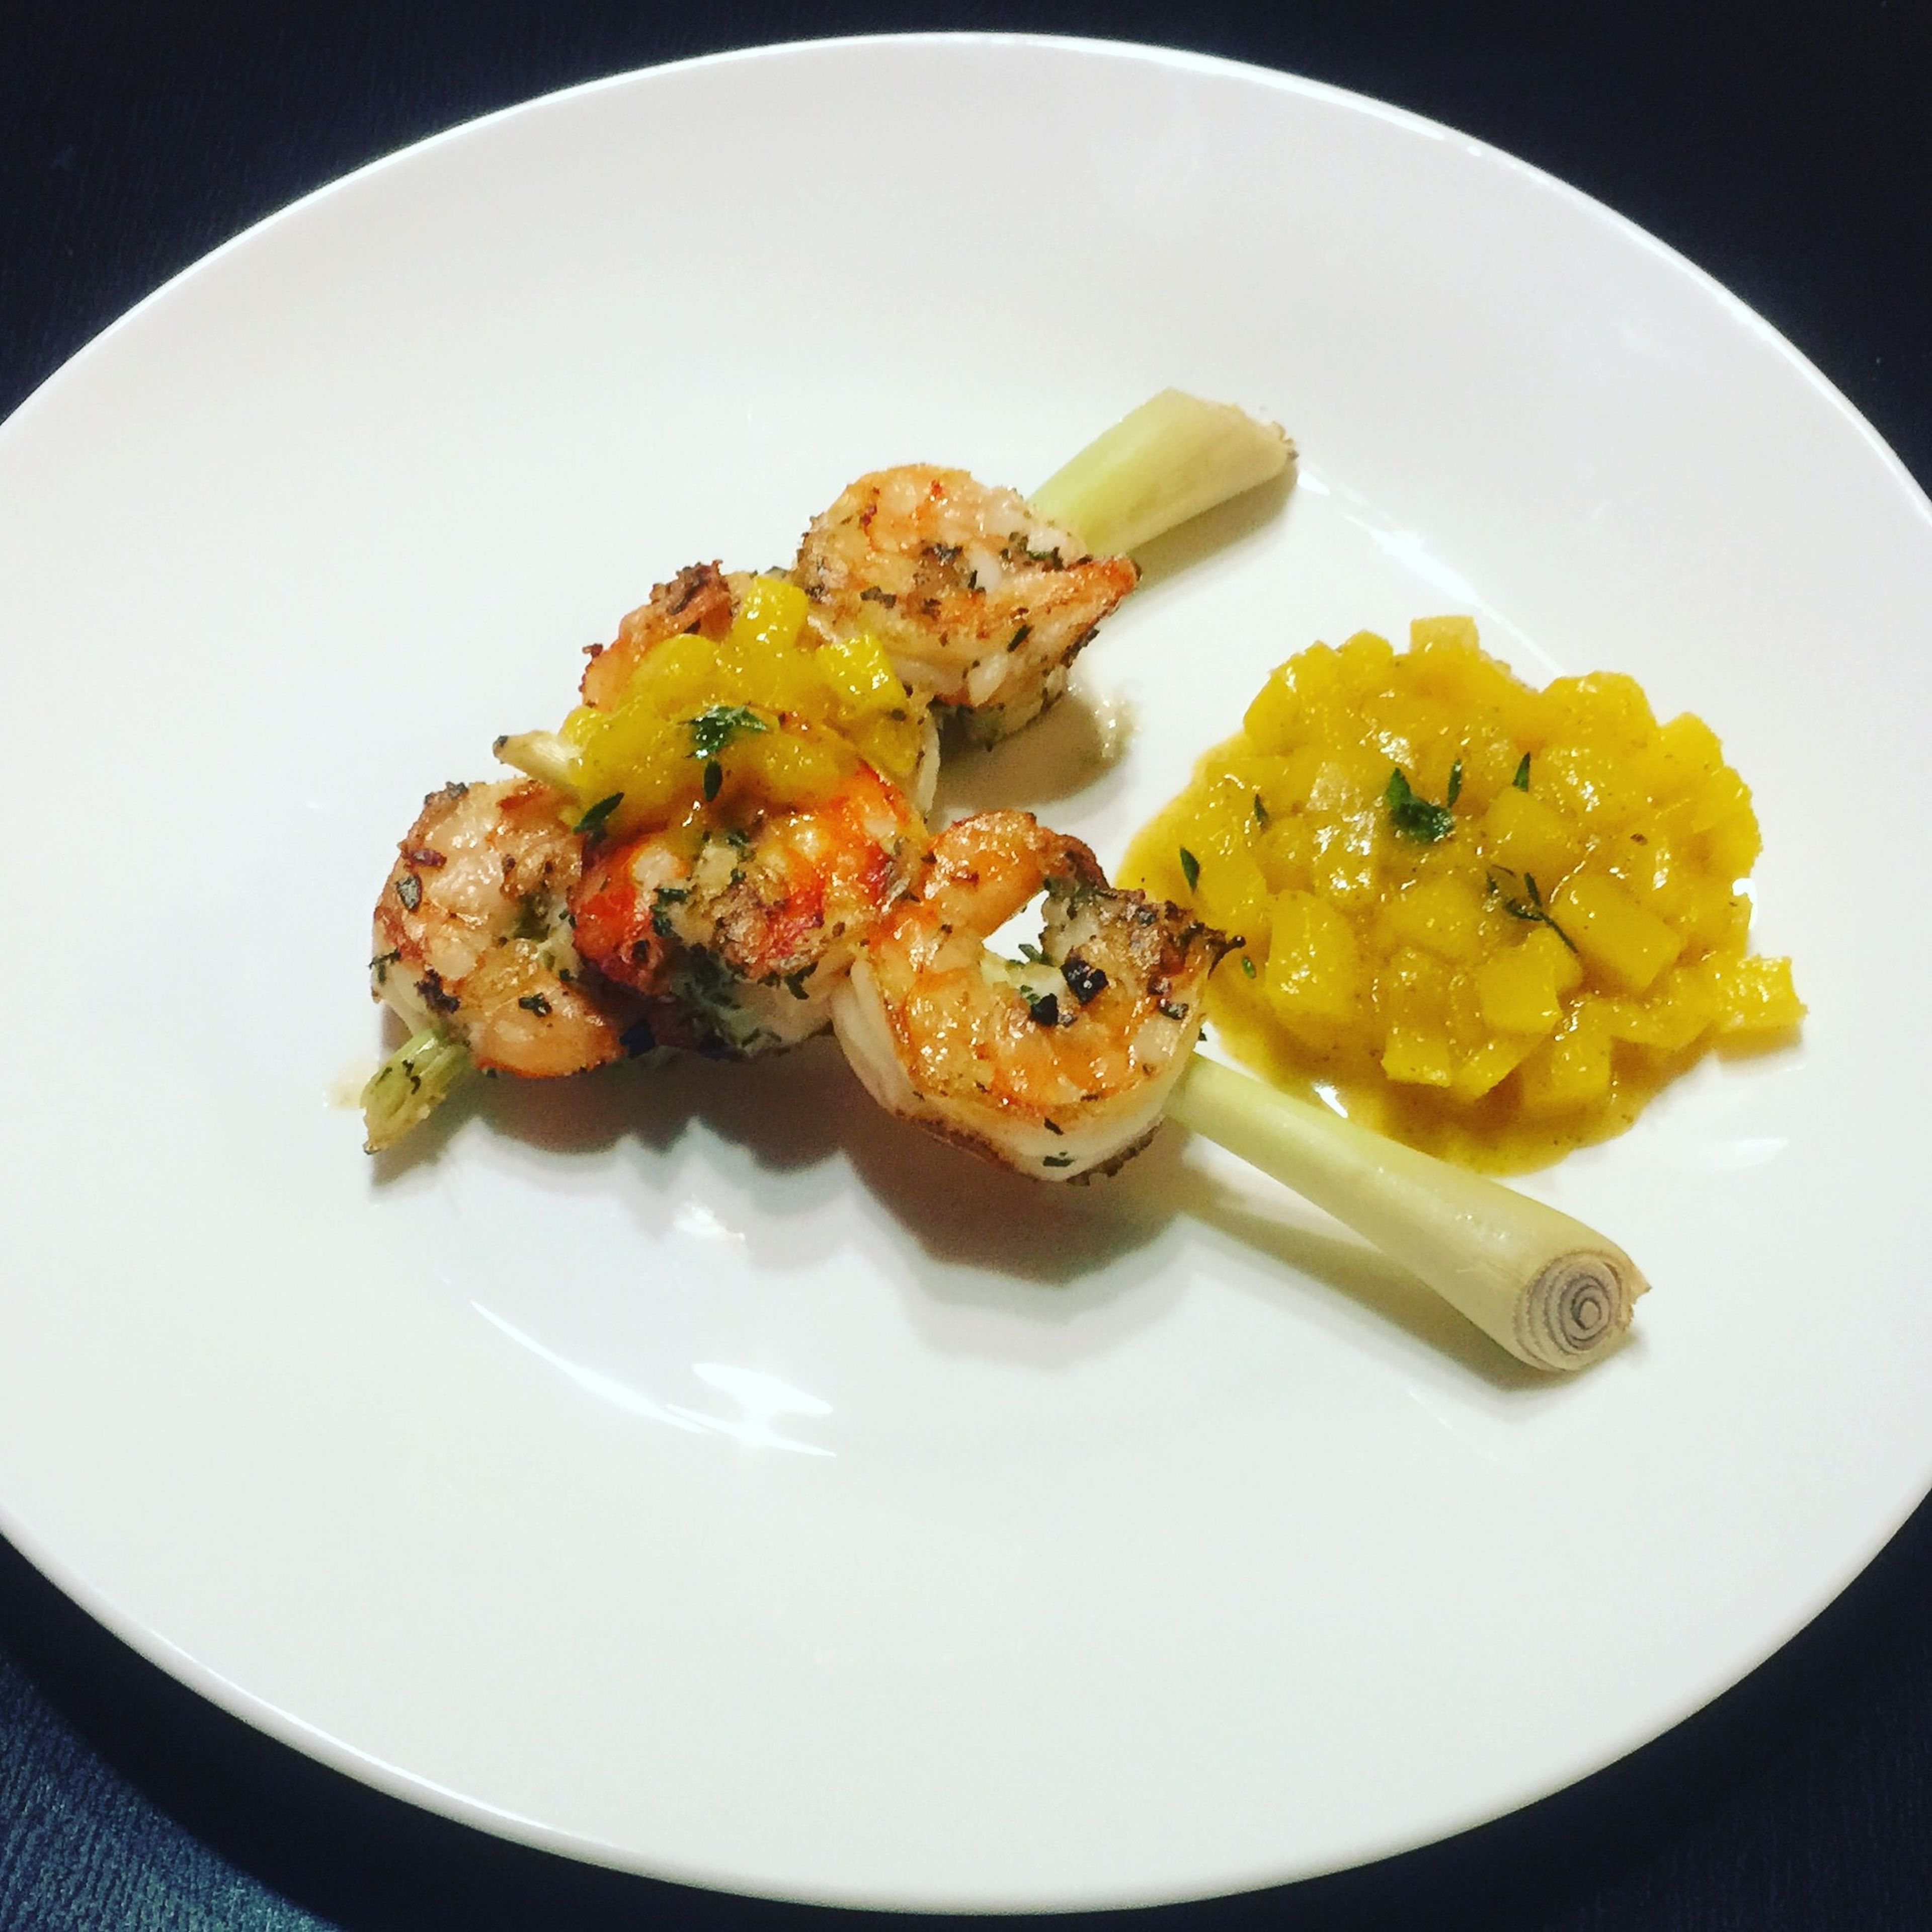 Marinated shrimp with mango salsa